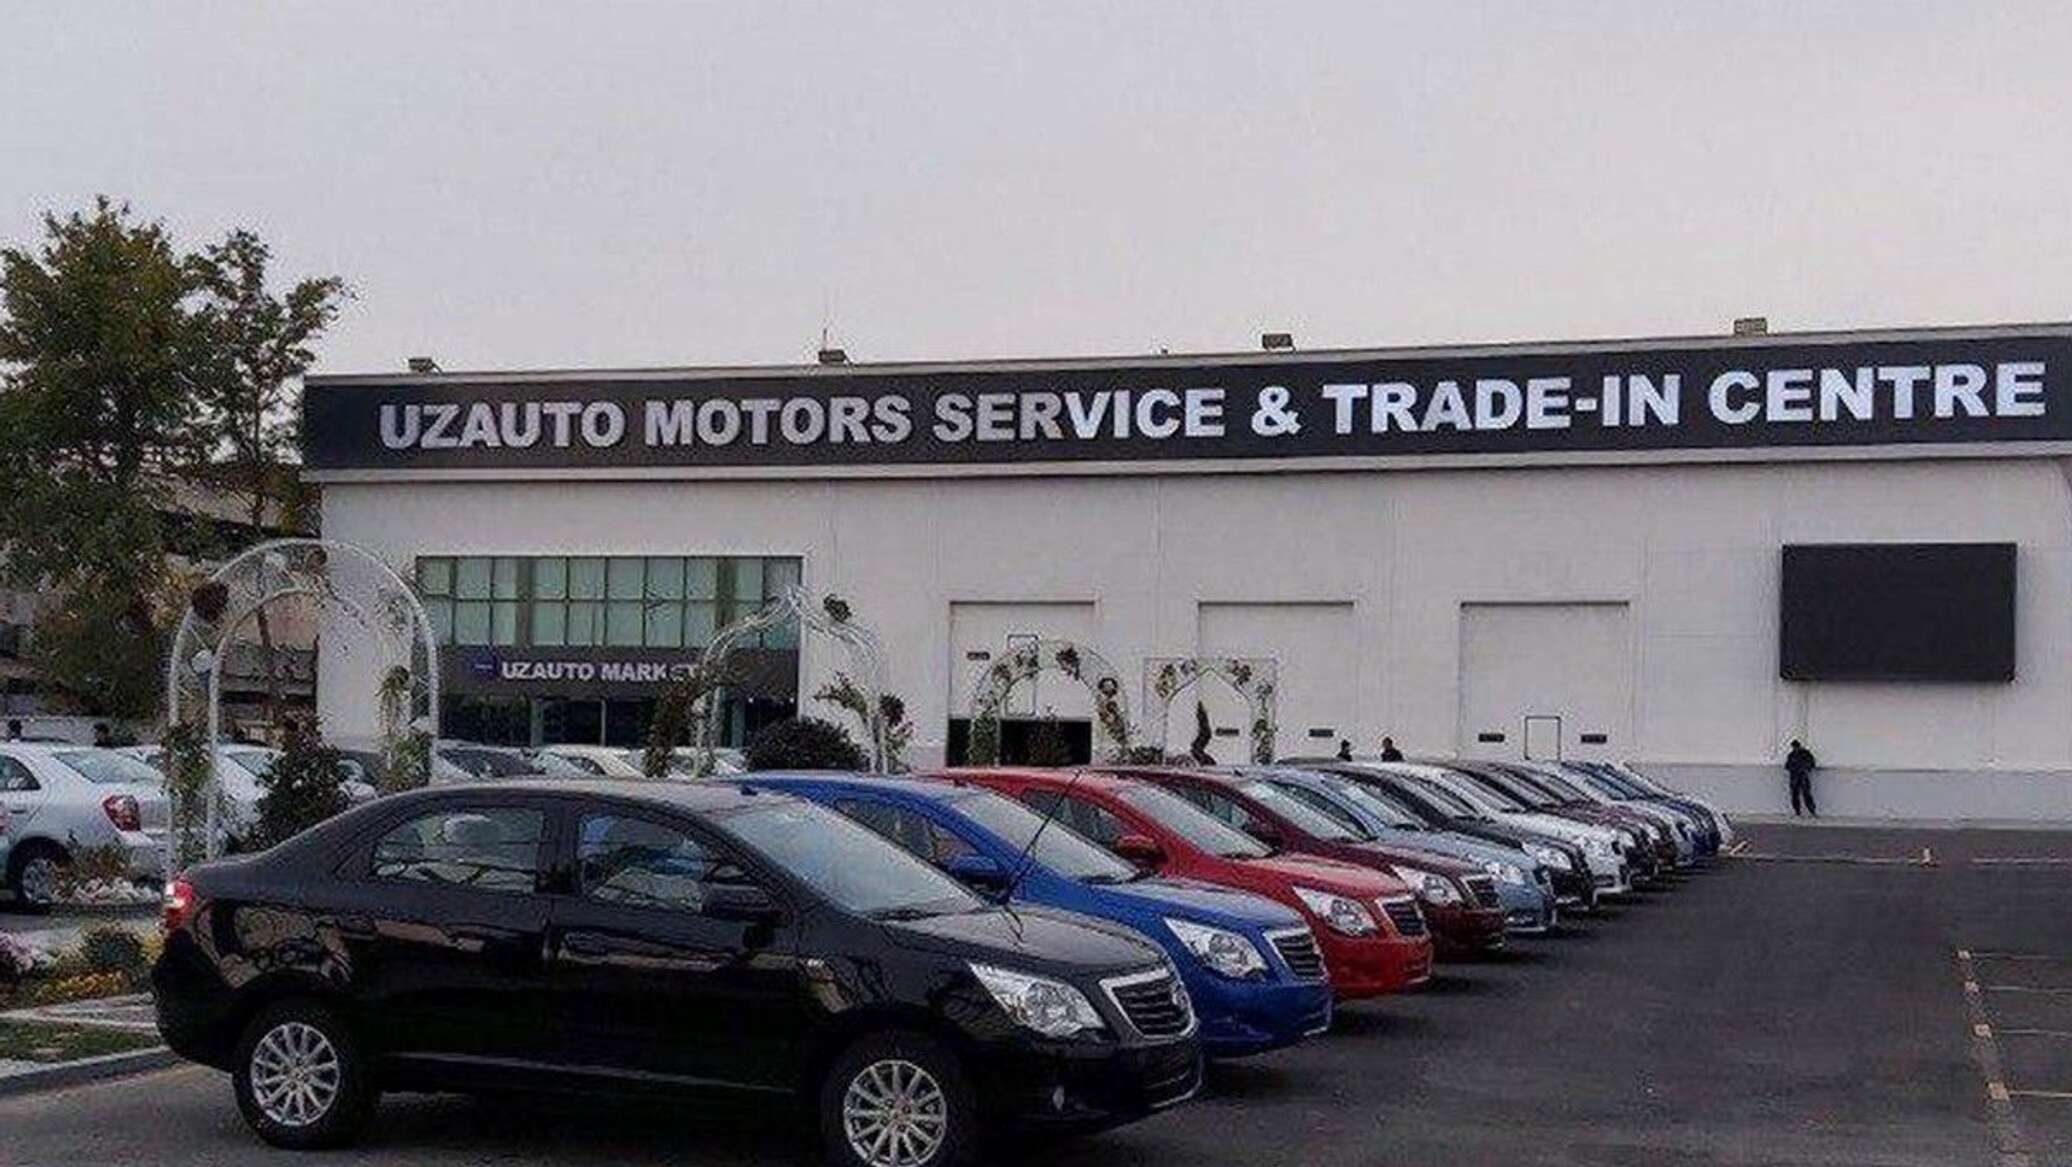 UZAUTO Motors